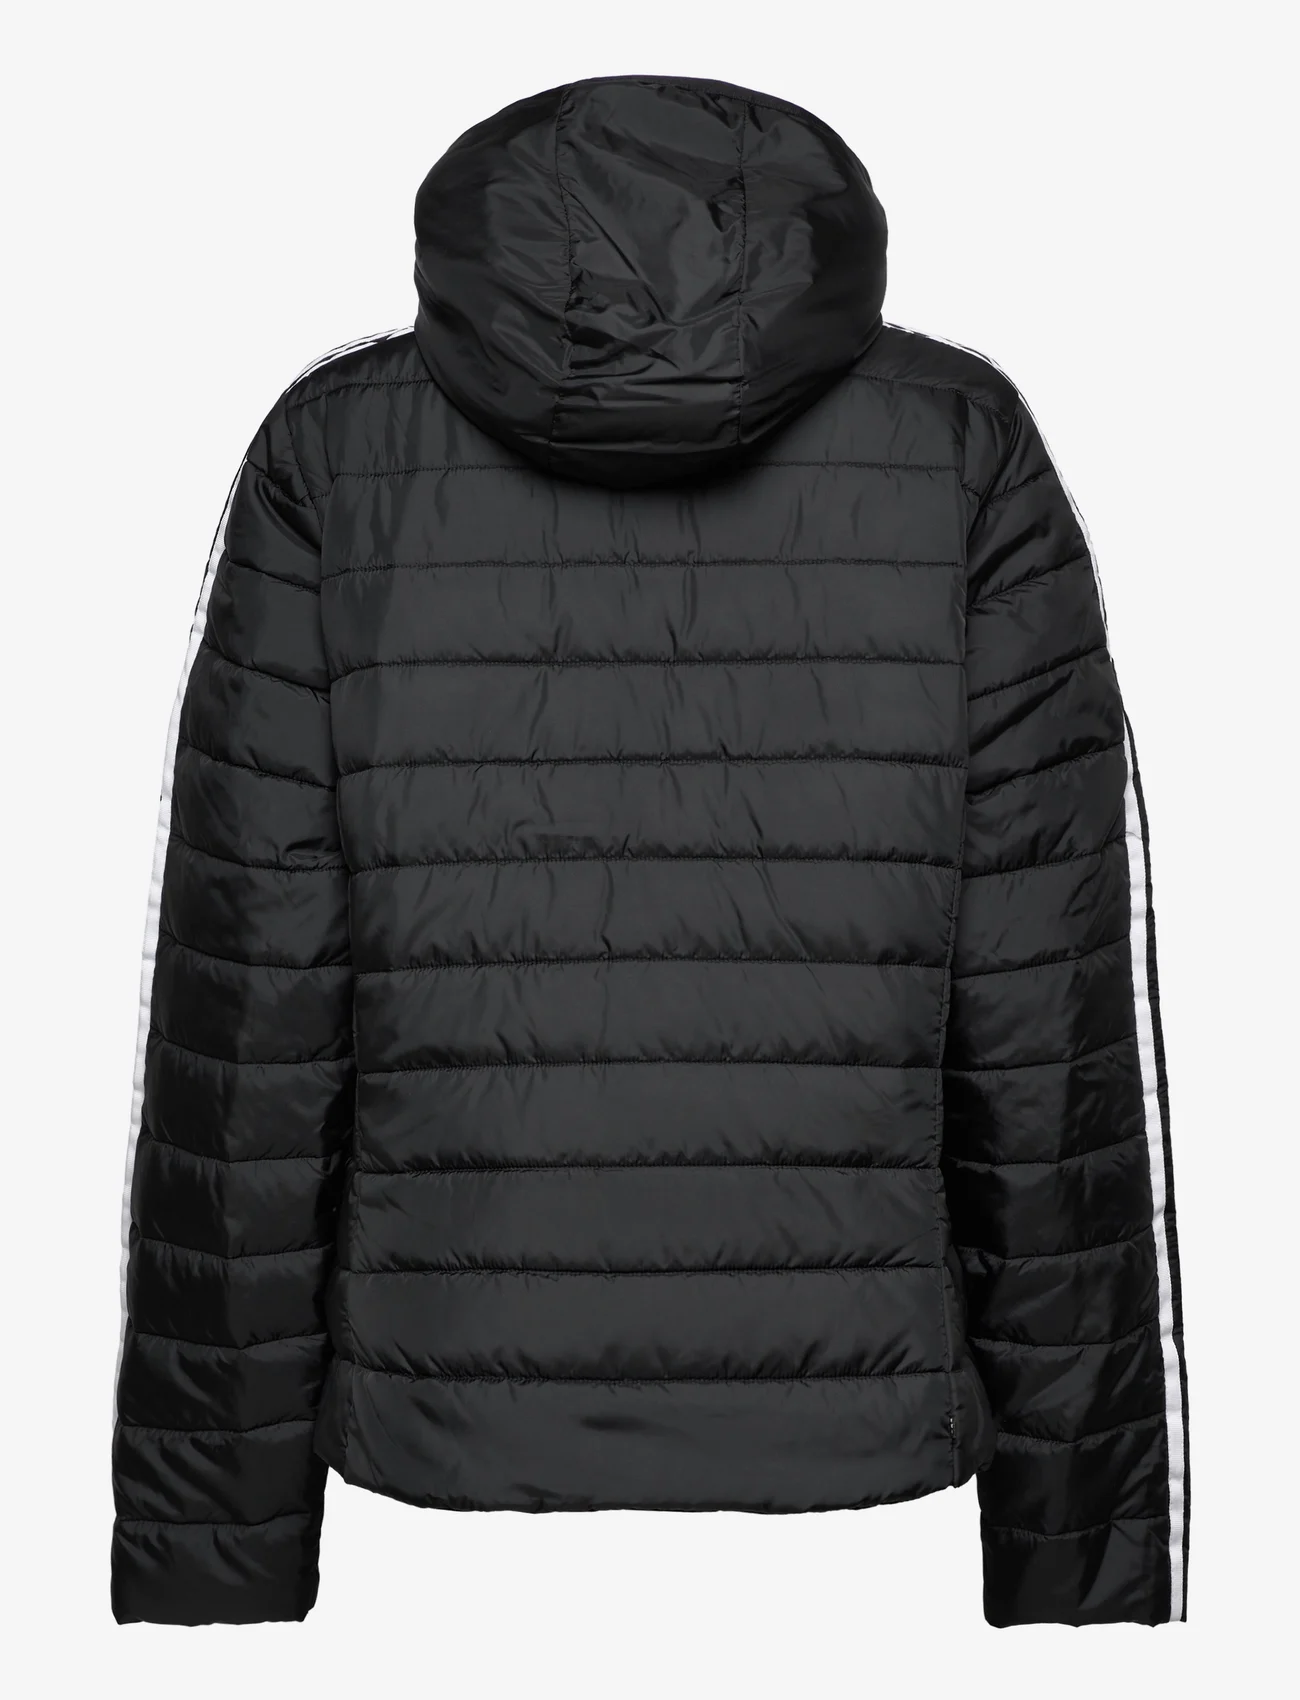 adidas Originals - Hooded Premium Slim Jacket (Plus Size) - vinterjakker - black - 1